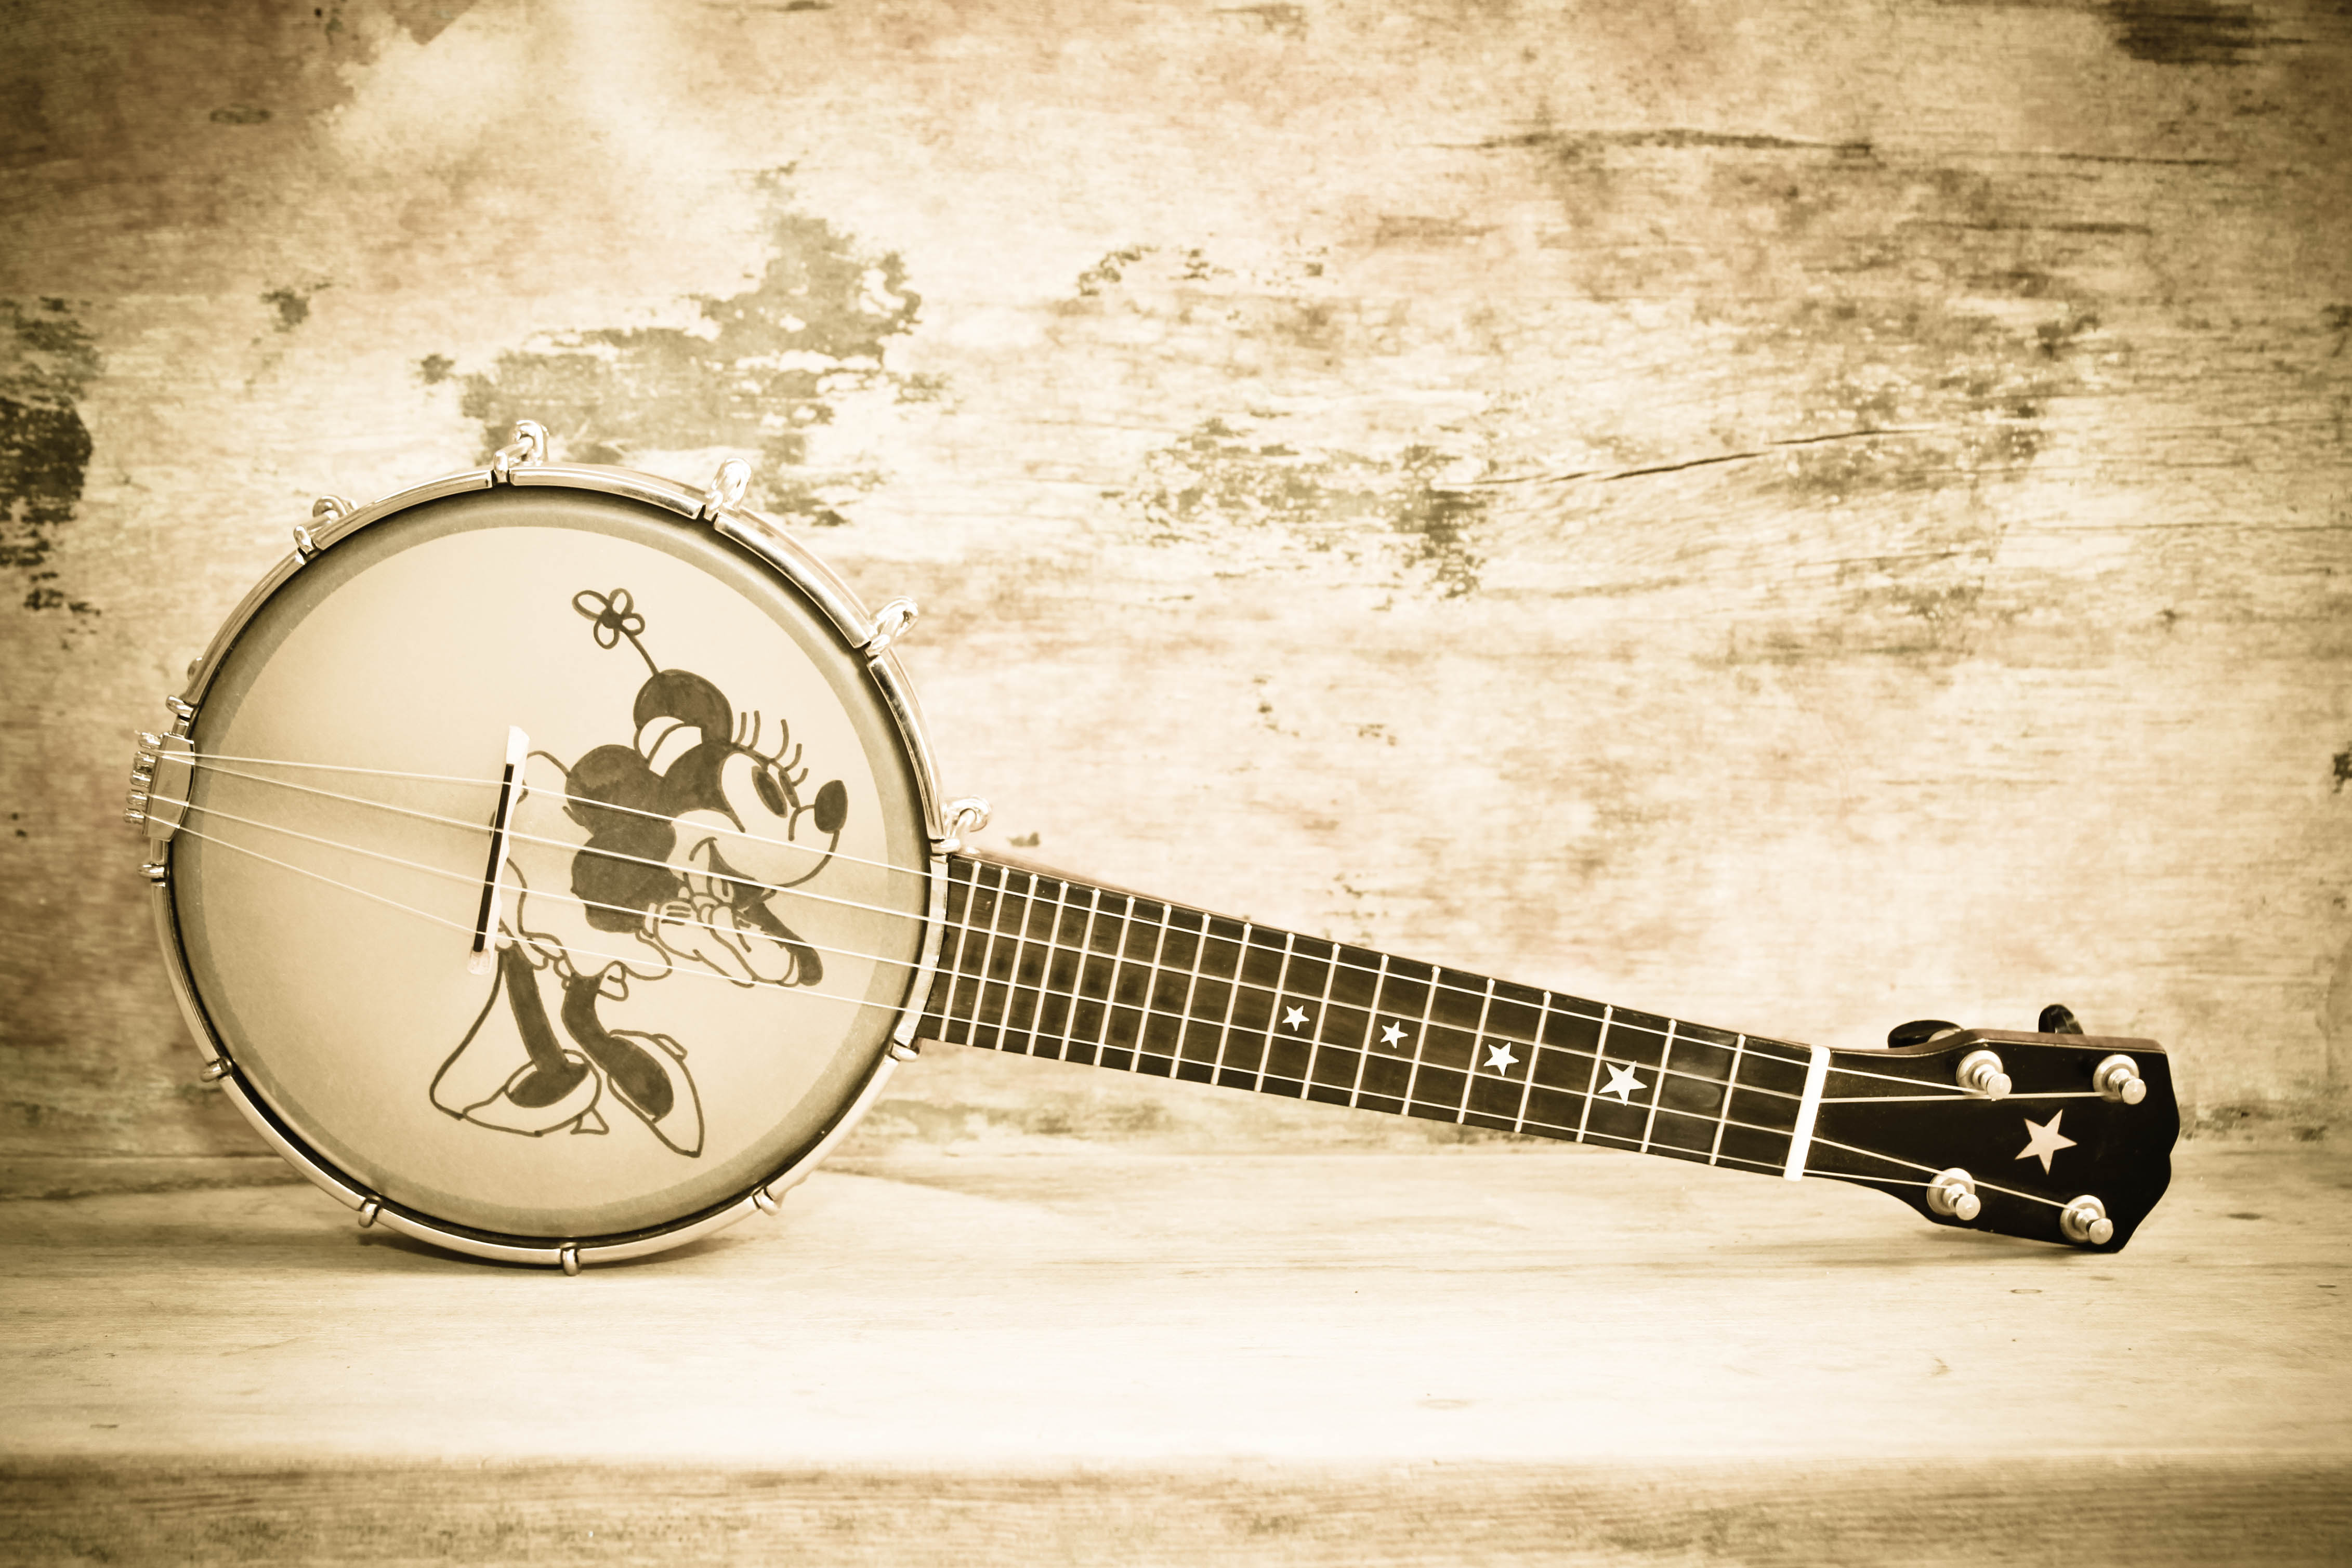 Discover 76+ banjo wallpaper latest